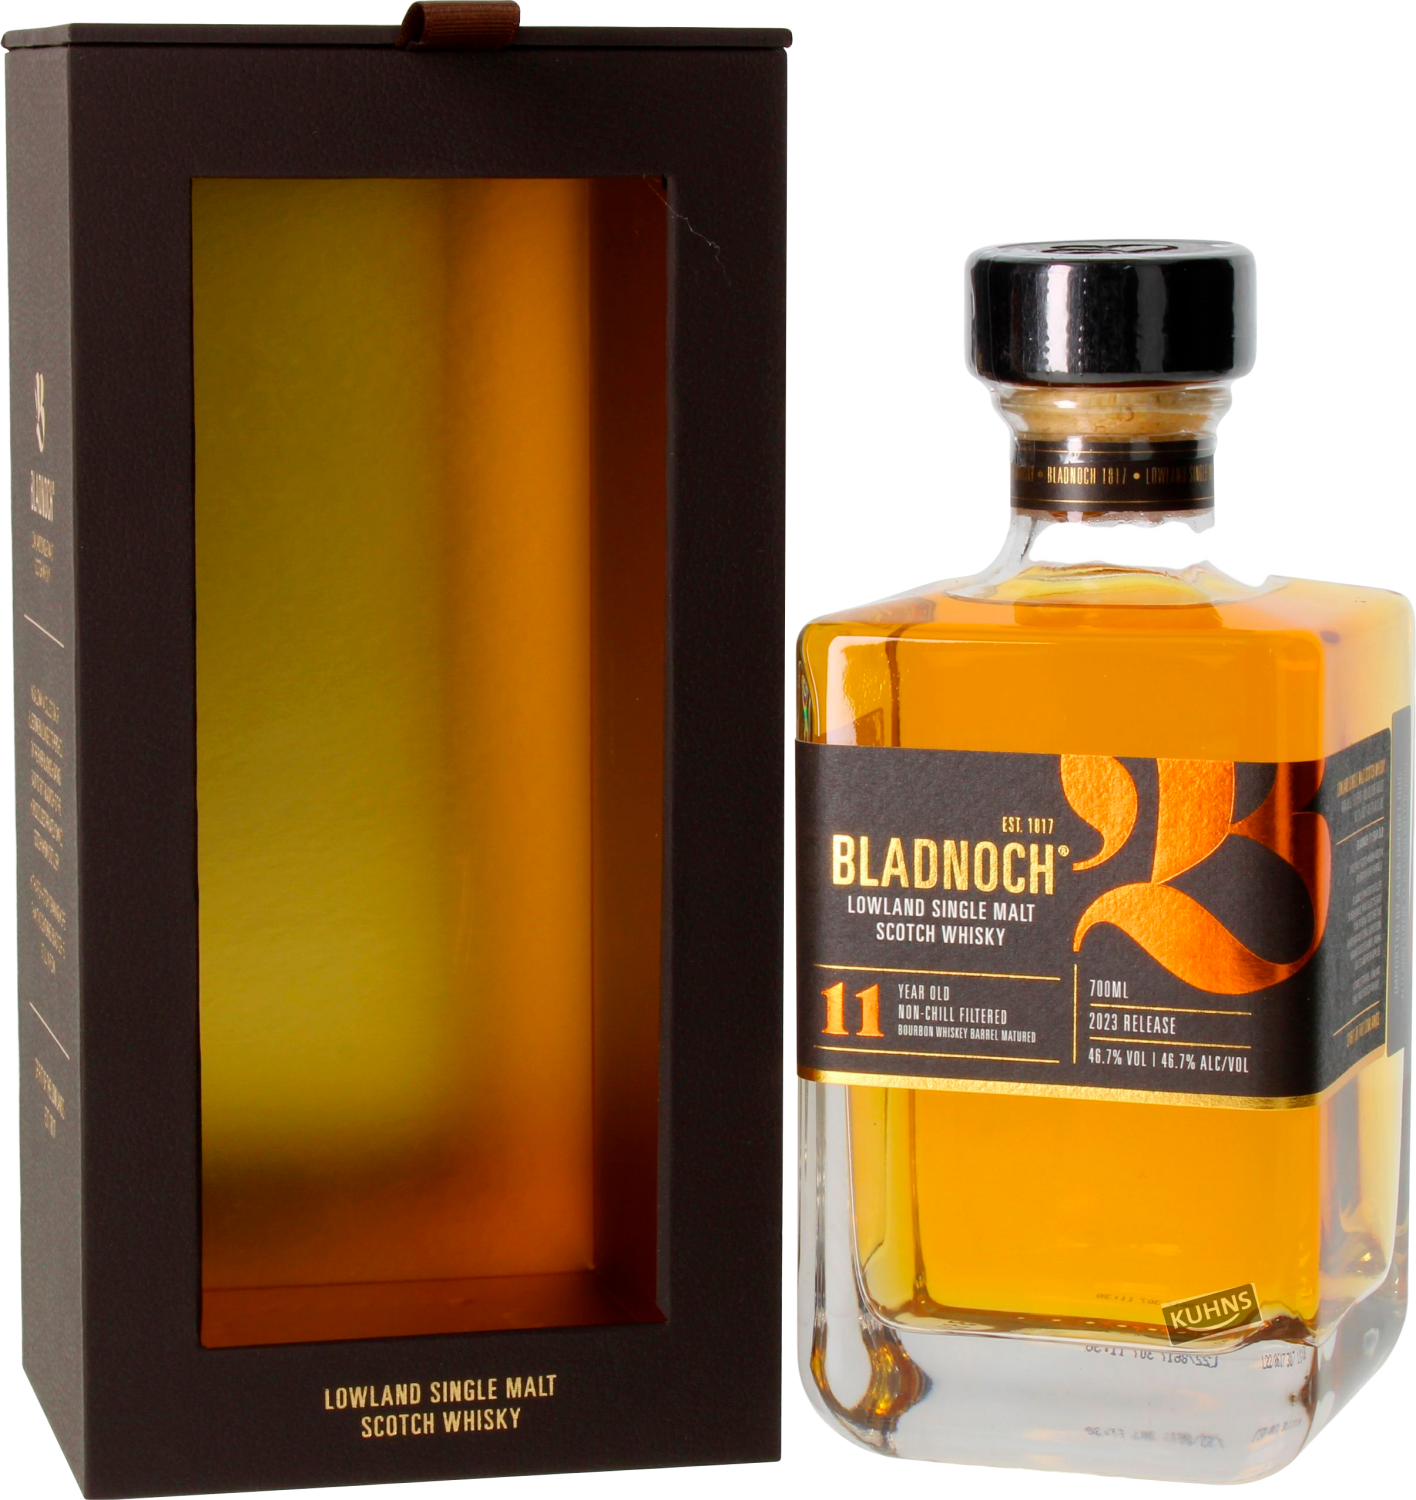 Bladnoch 11 Years Old Single Malt Scotch Whisky (gift box) glen turner 12 years old single malt scotch whisky gift box